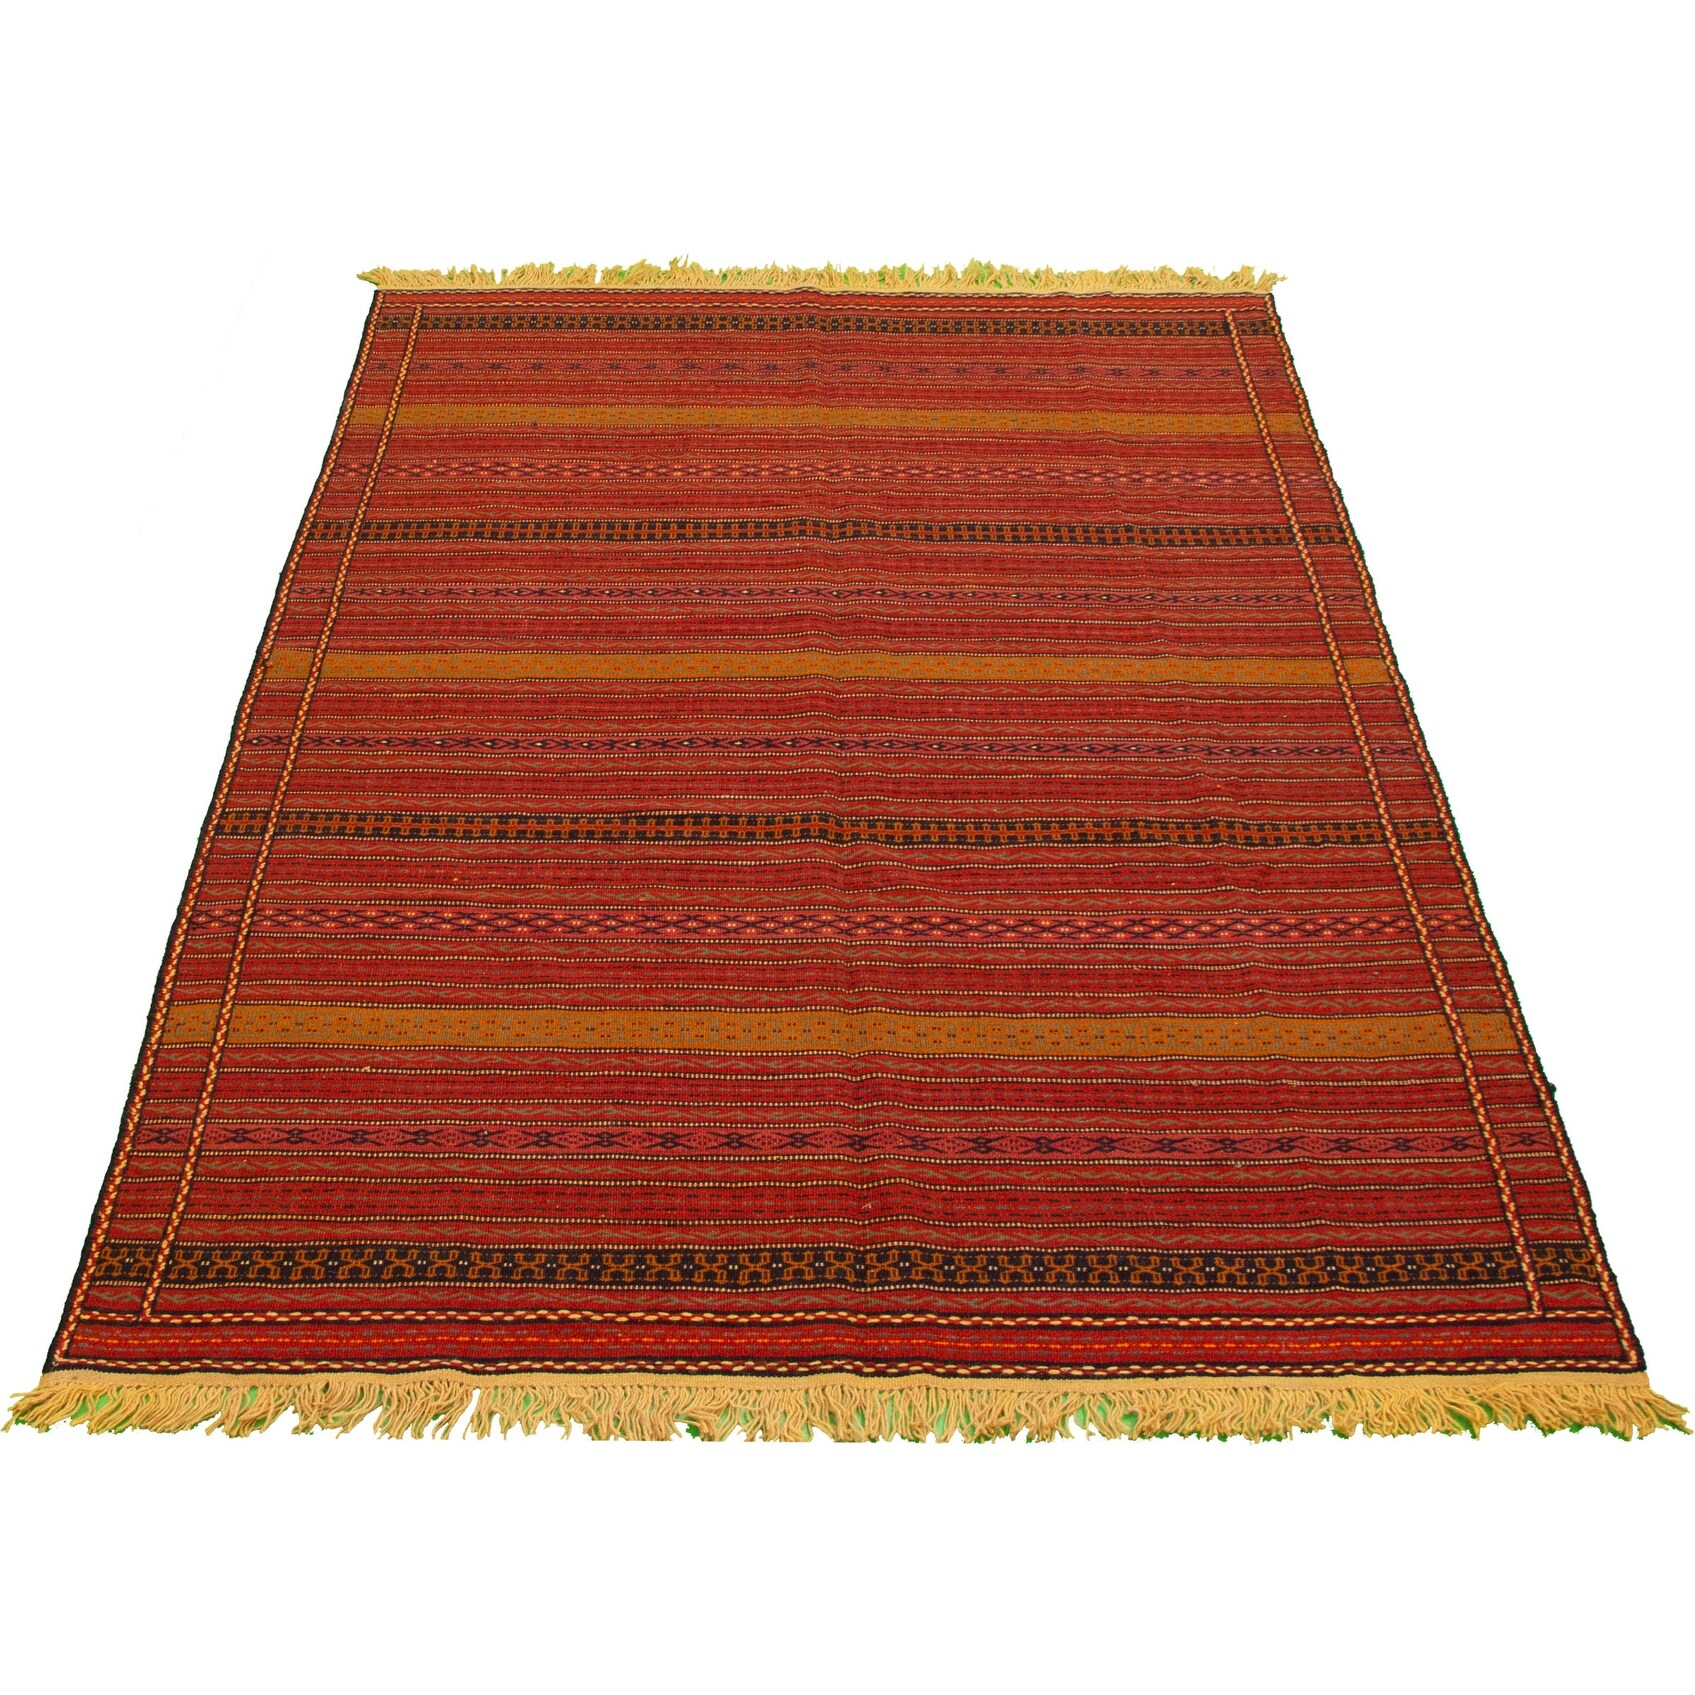 eCarpet Gallery Large Area Rug for Living Room 332785 Hand-Knotted Wool Rug Bedroom Ottoman Kashkoli Flat-Weaves & Kilims Red Tapestry Kilim 6'3 x 9'6 